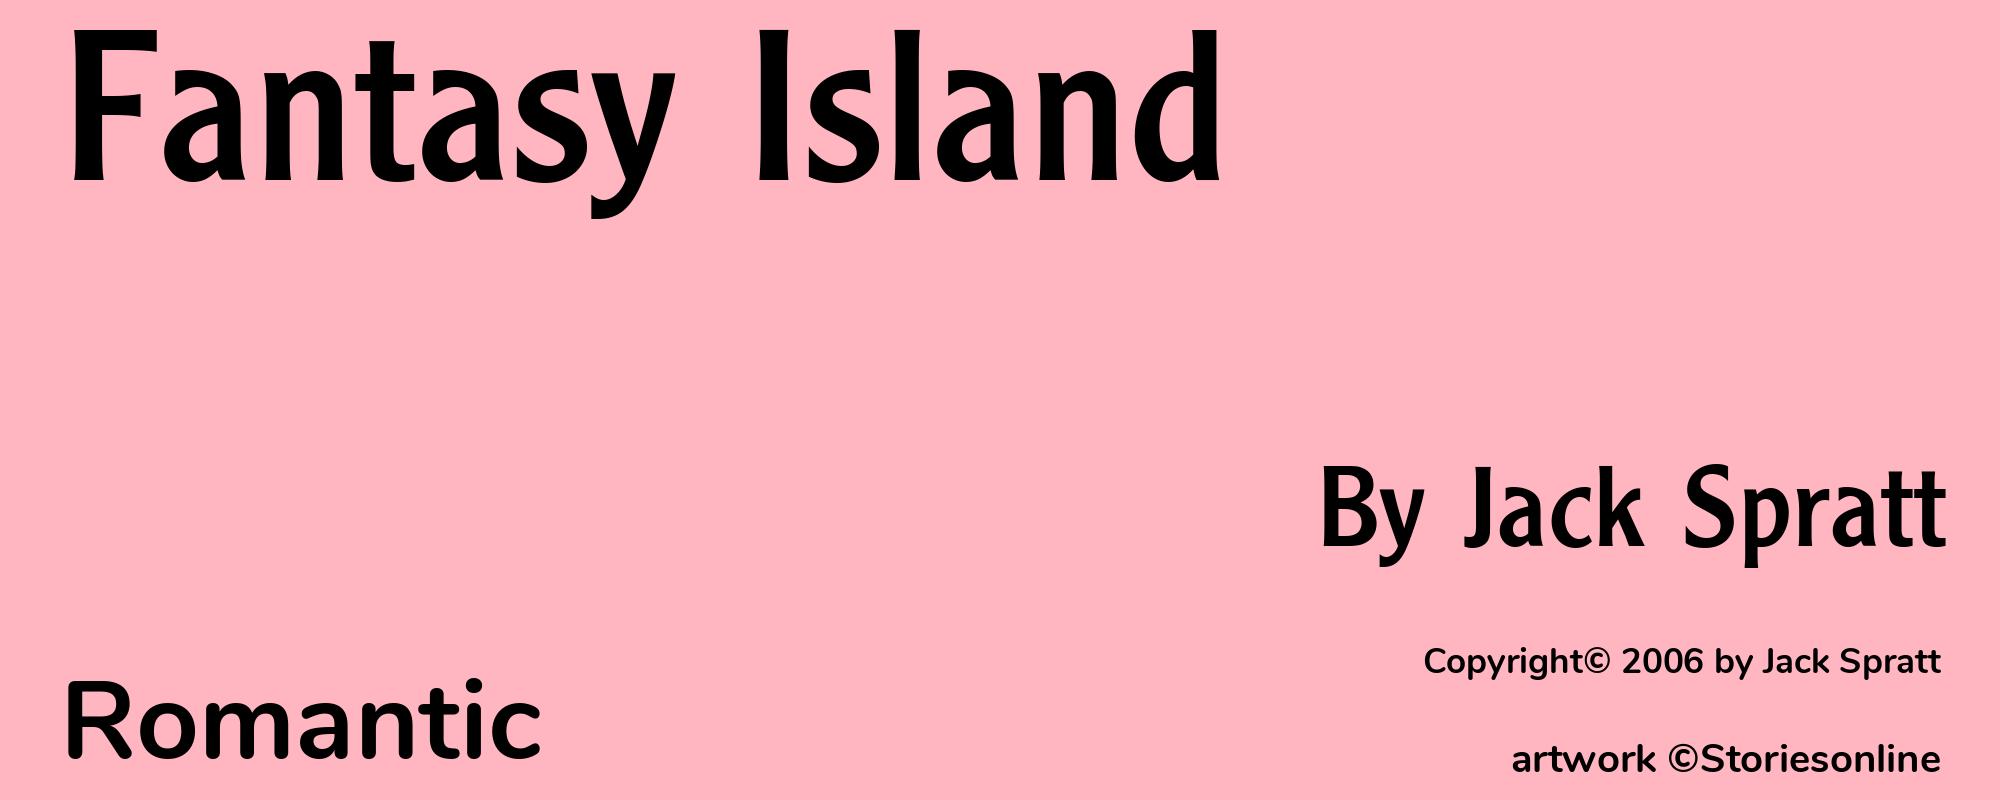 Fantasy Island - Cover